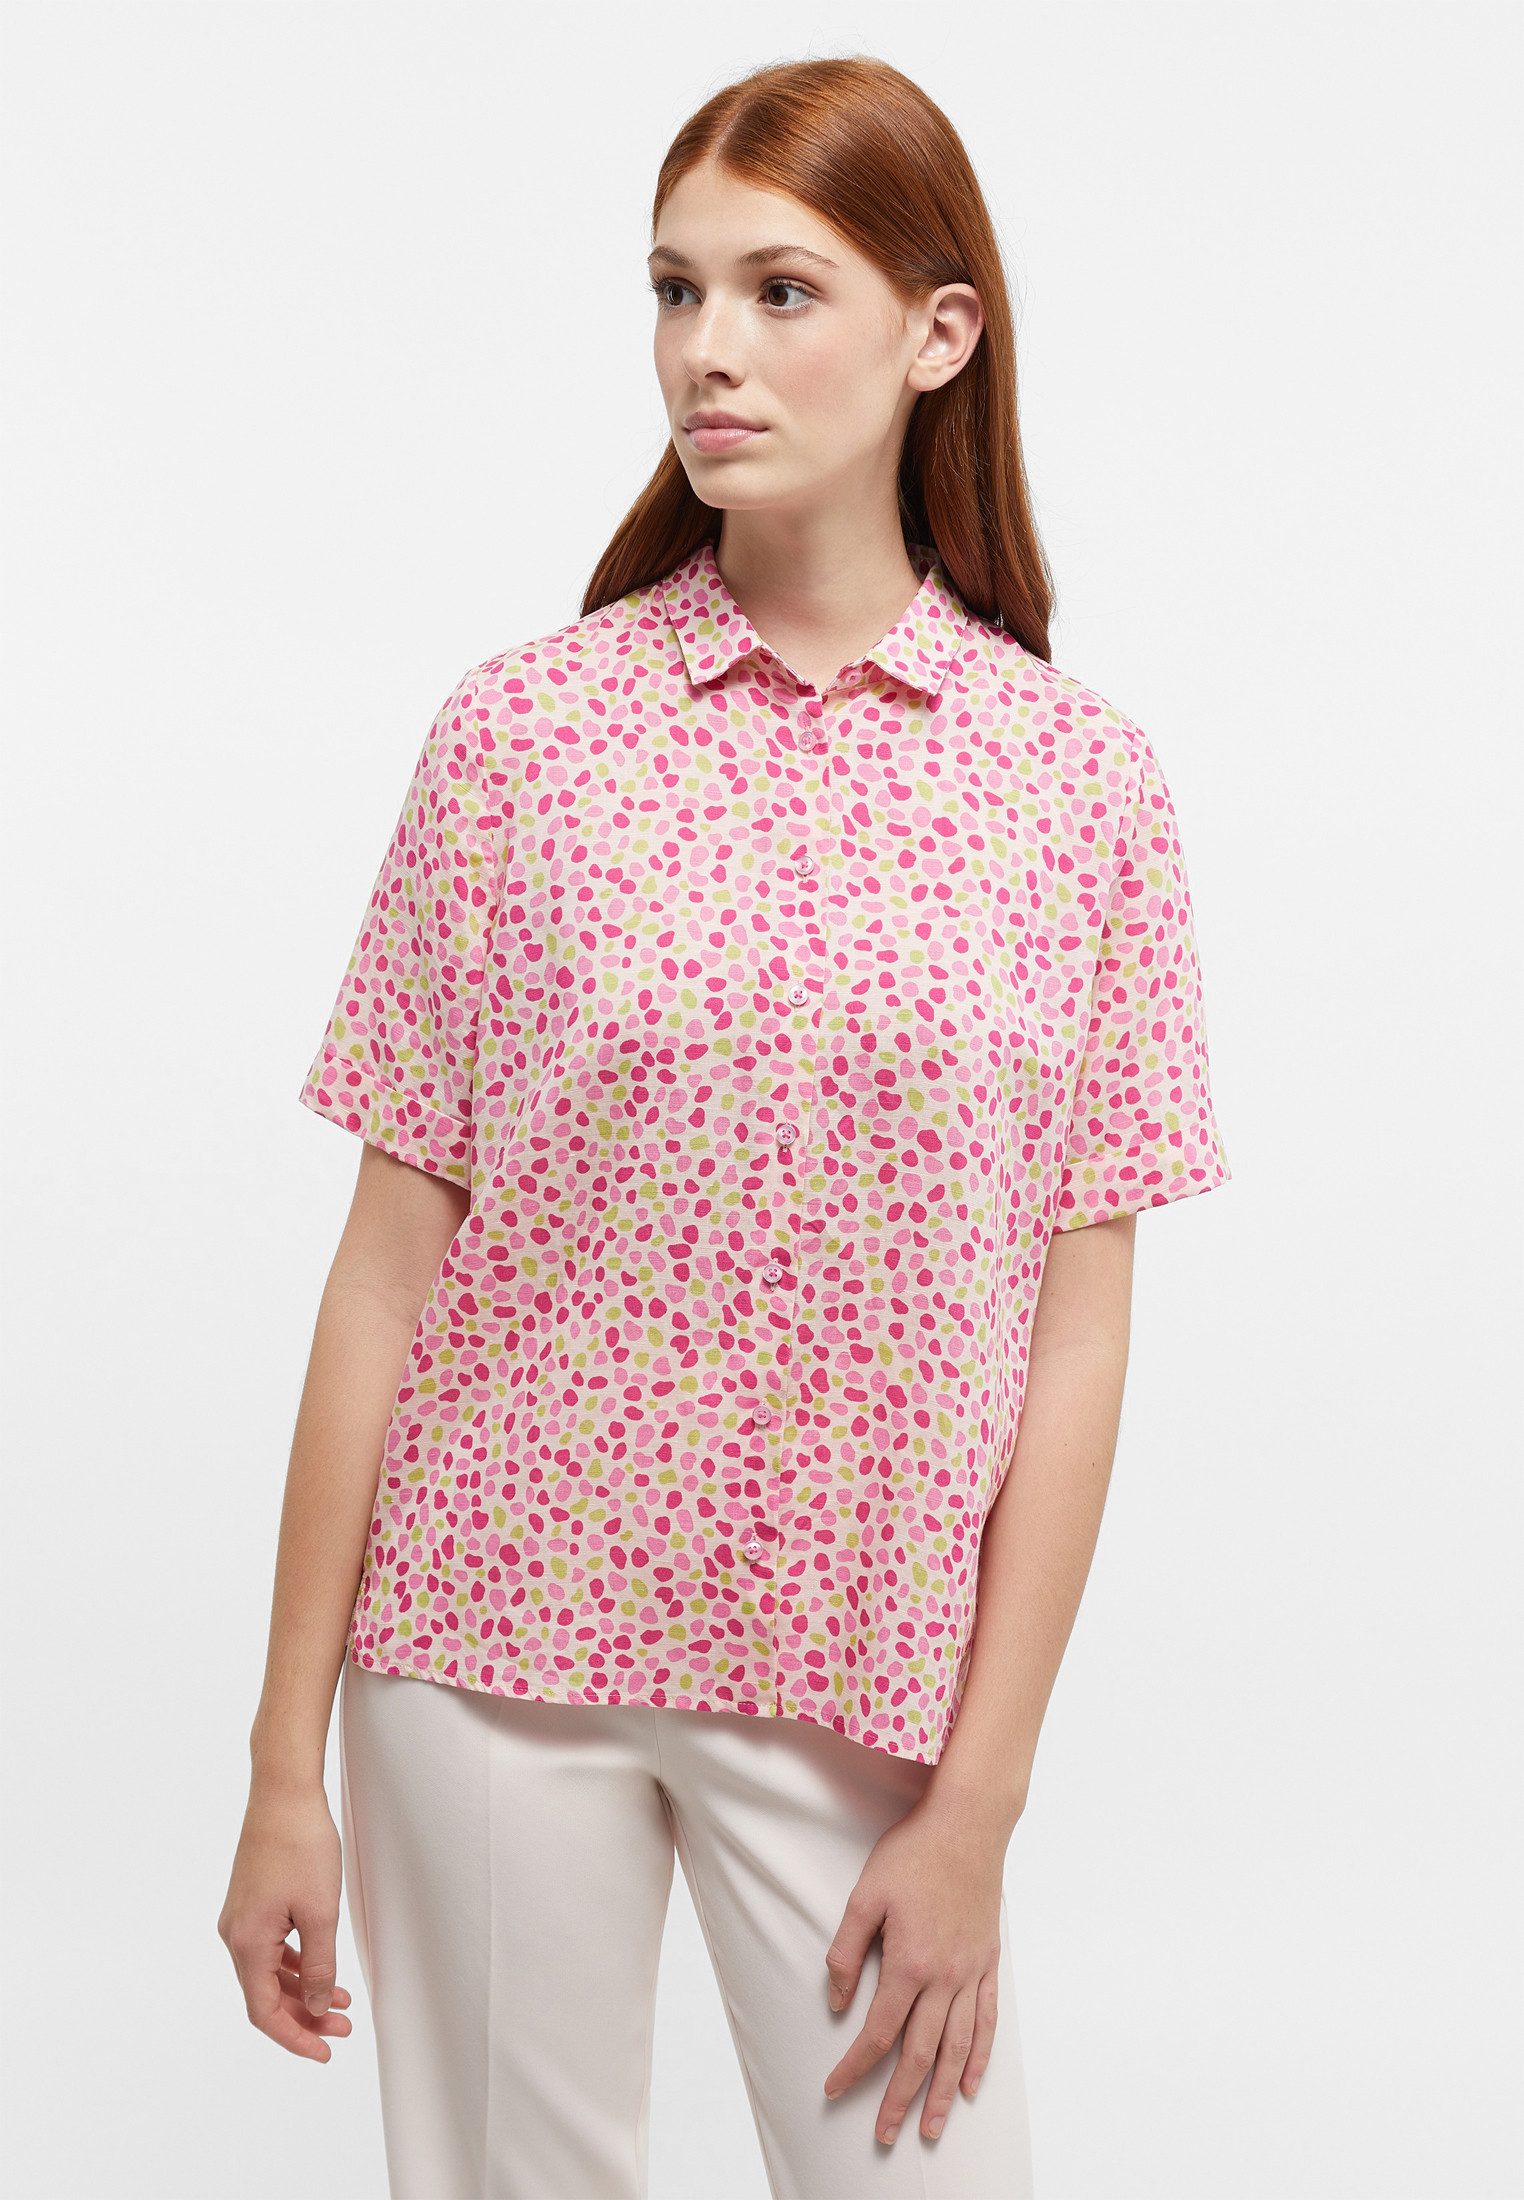 Lila Hemden online kaufen | OTTO